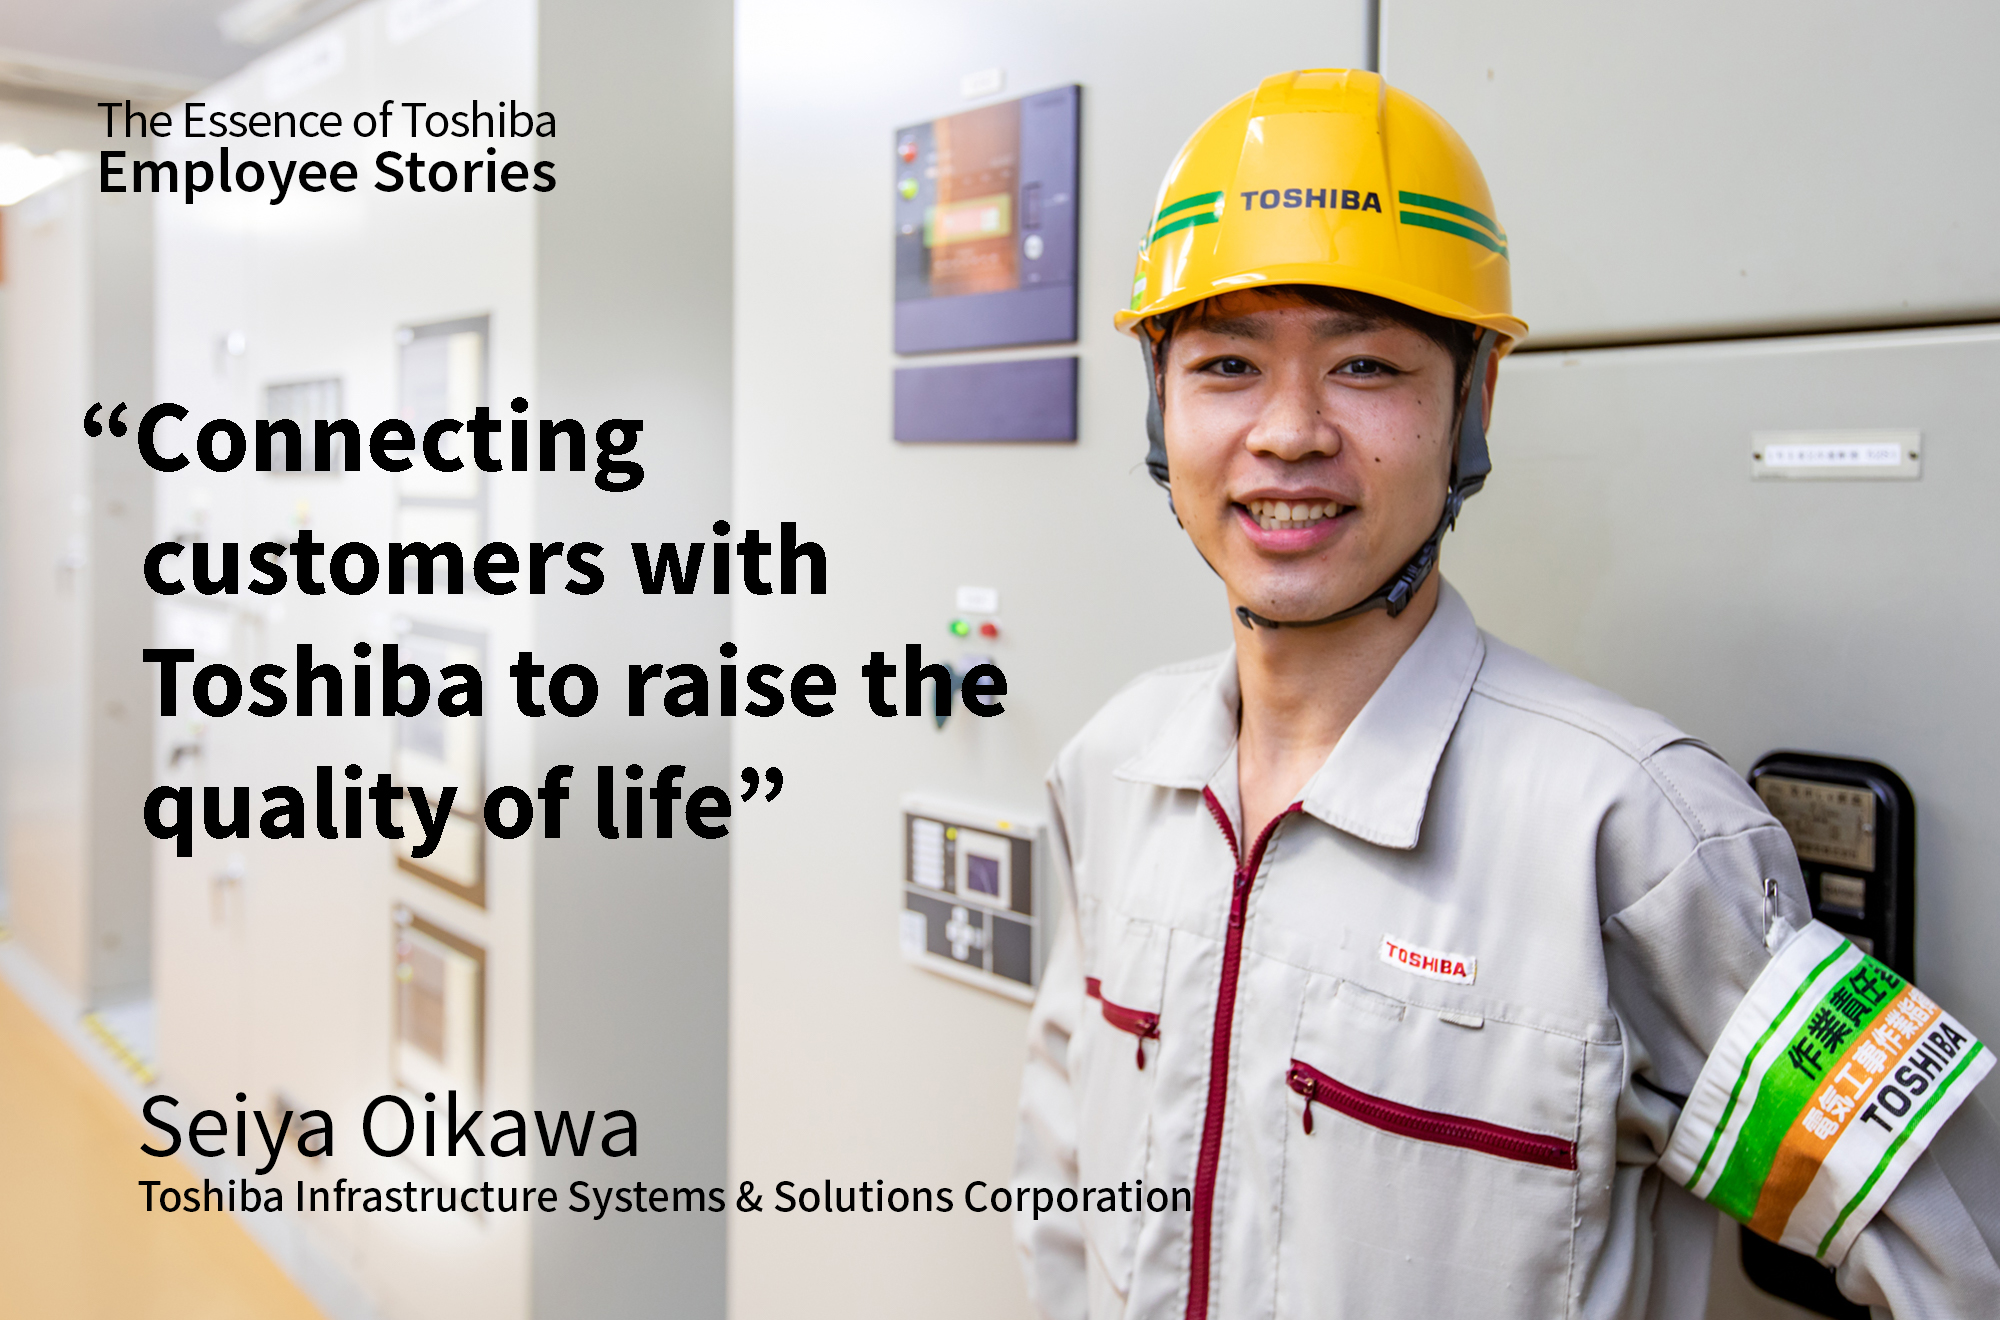 Toshiba Infrastructure Systems & Solutions Corporation: Seiya Oikawa